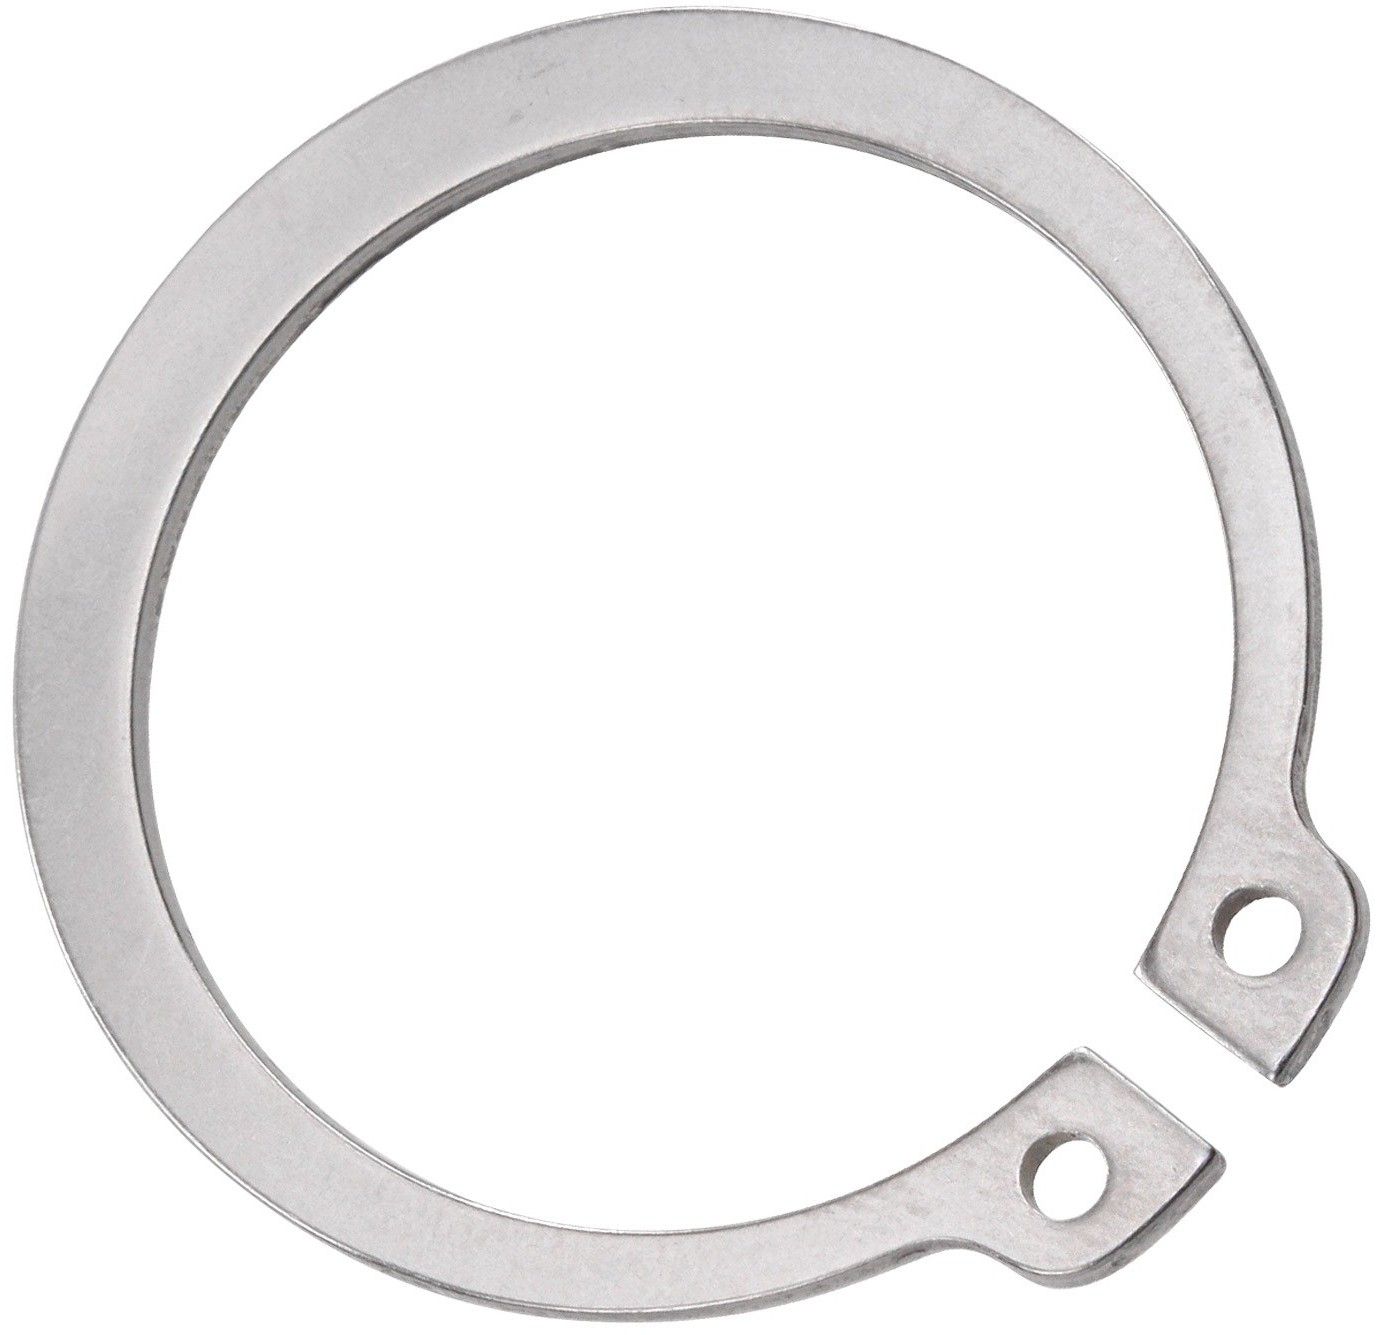 Кольцо стопорное наружное 115х4 DIN 471, нержавеющая сталь 1.4122 (А2) - фото